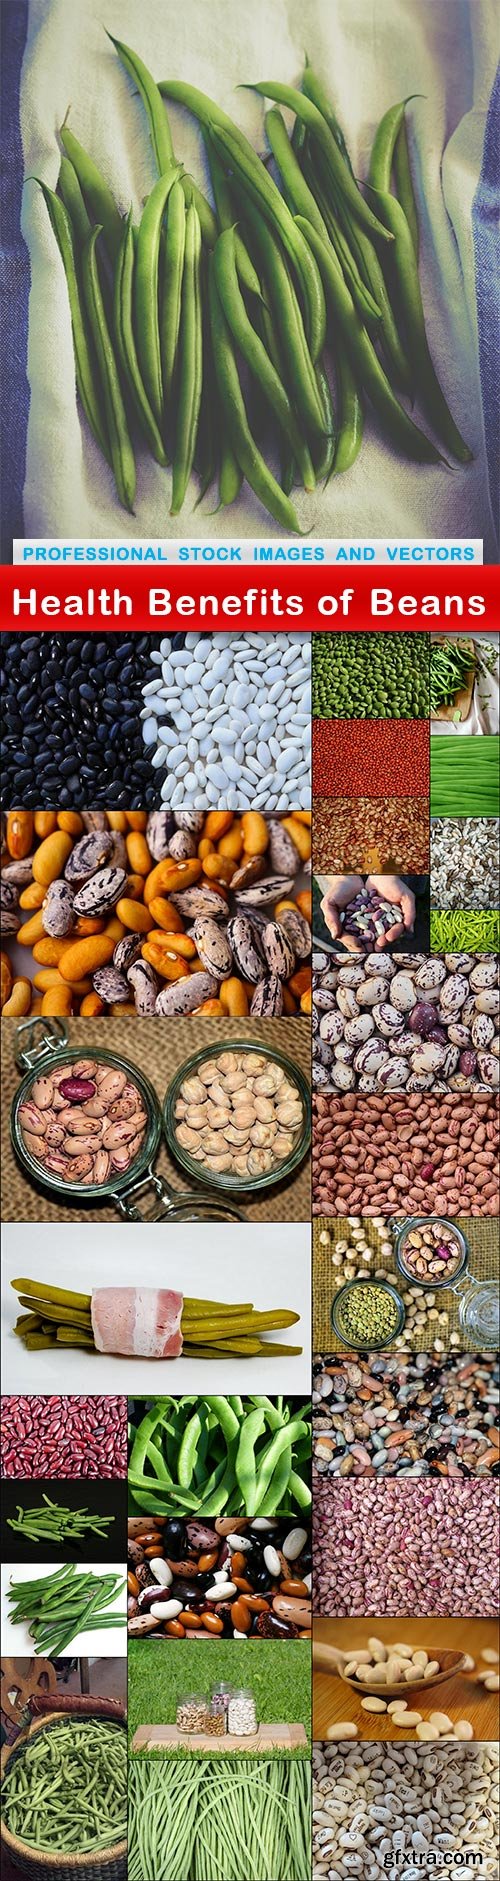 Health Benefits of Beans - 28 UHQ JPEG